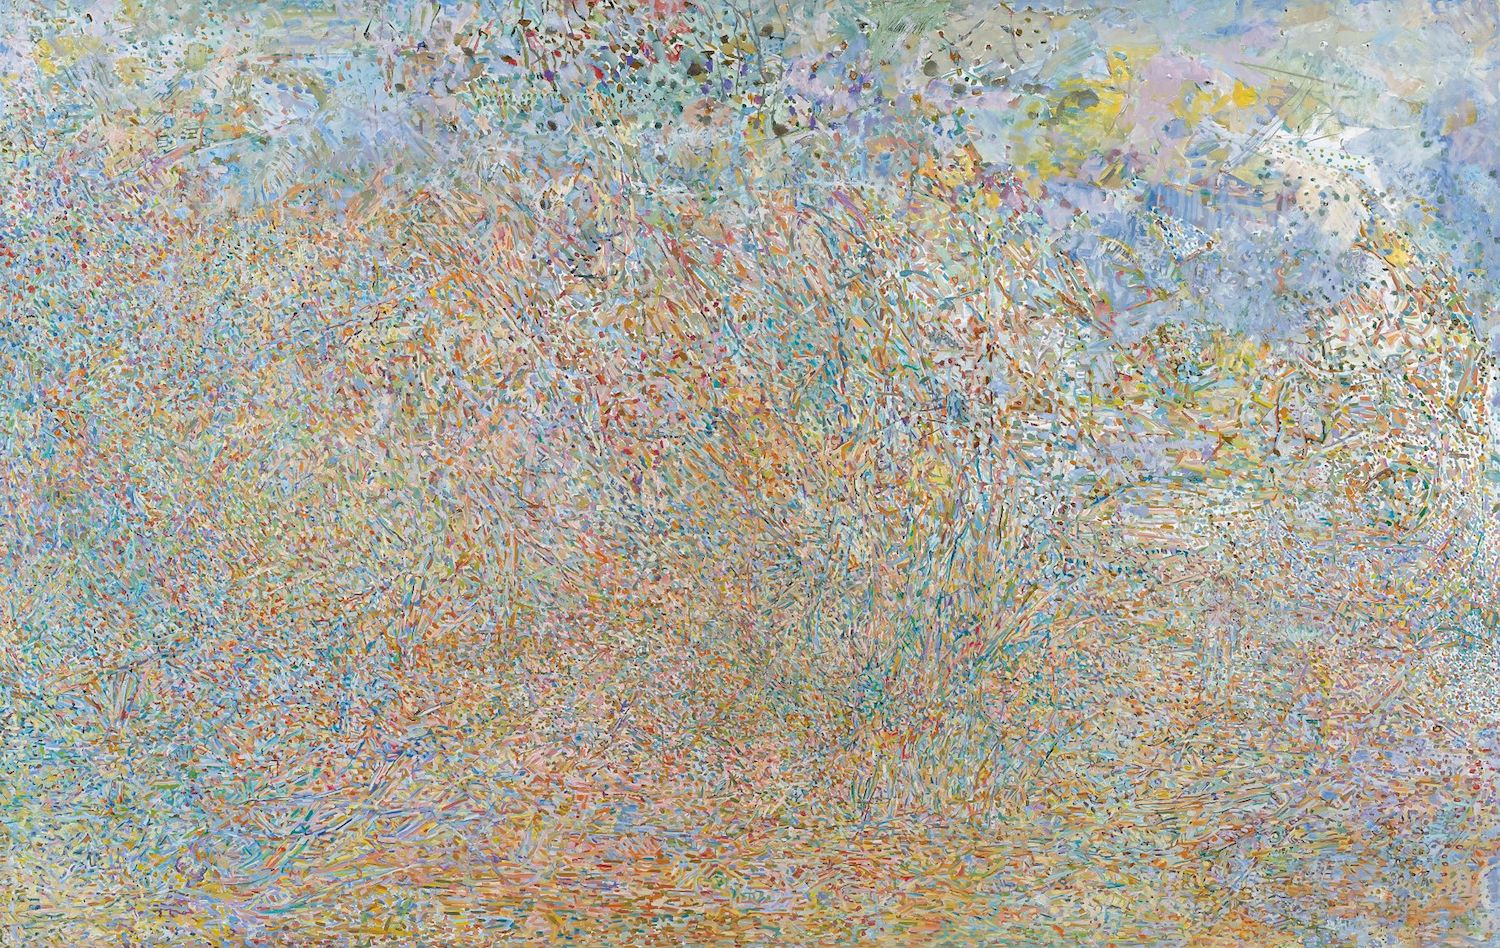 Odem Forest. Zohar Cohen. Jackson's Painting Prize.